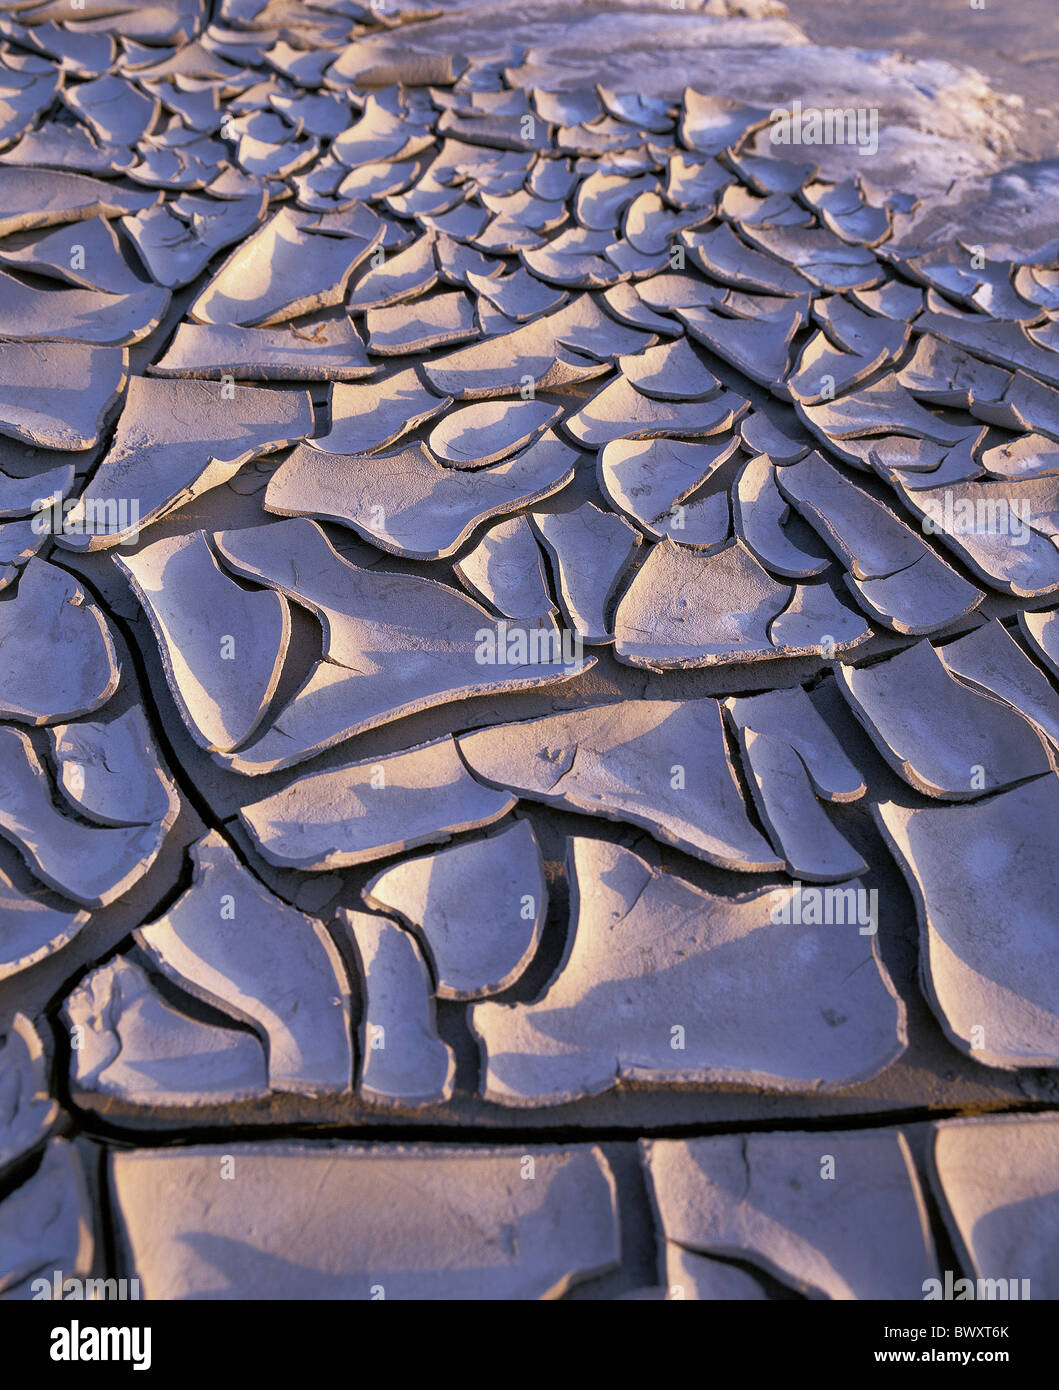 tides low ebb tide earth crusts cracked salt crusts France Europe near Mont St. Michel coast sea scenery Stock Photo